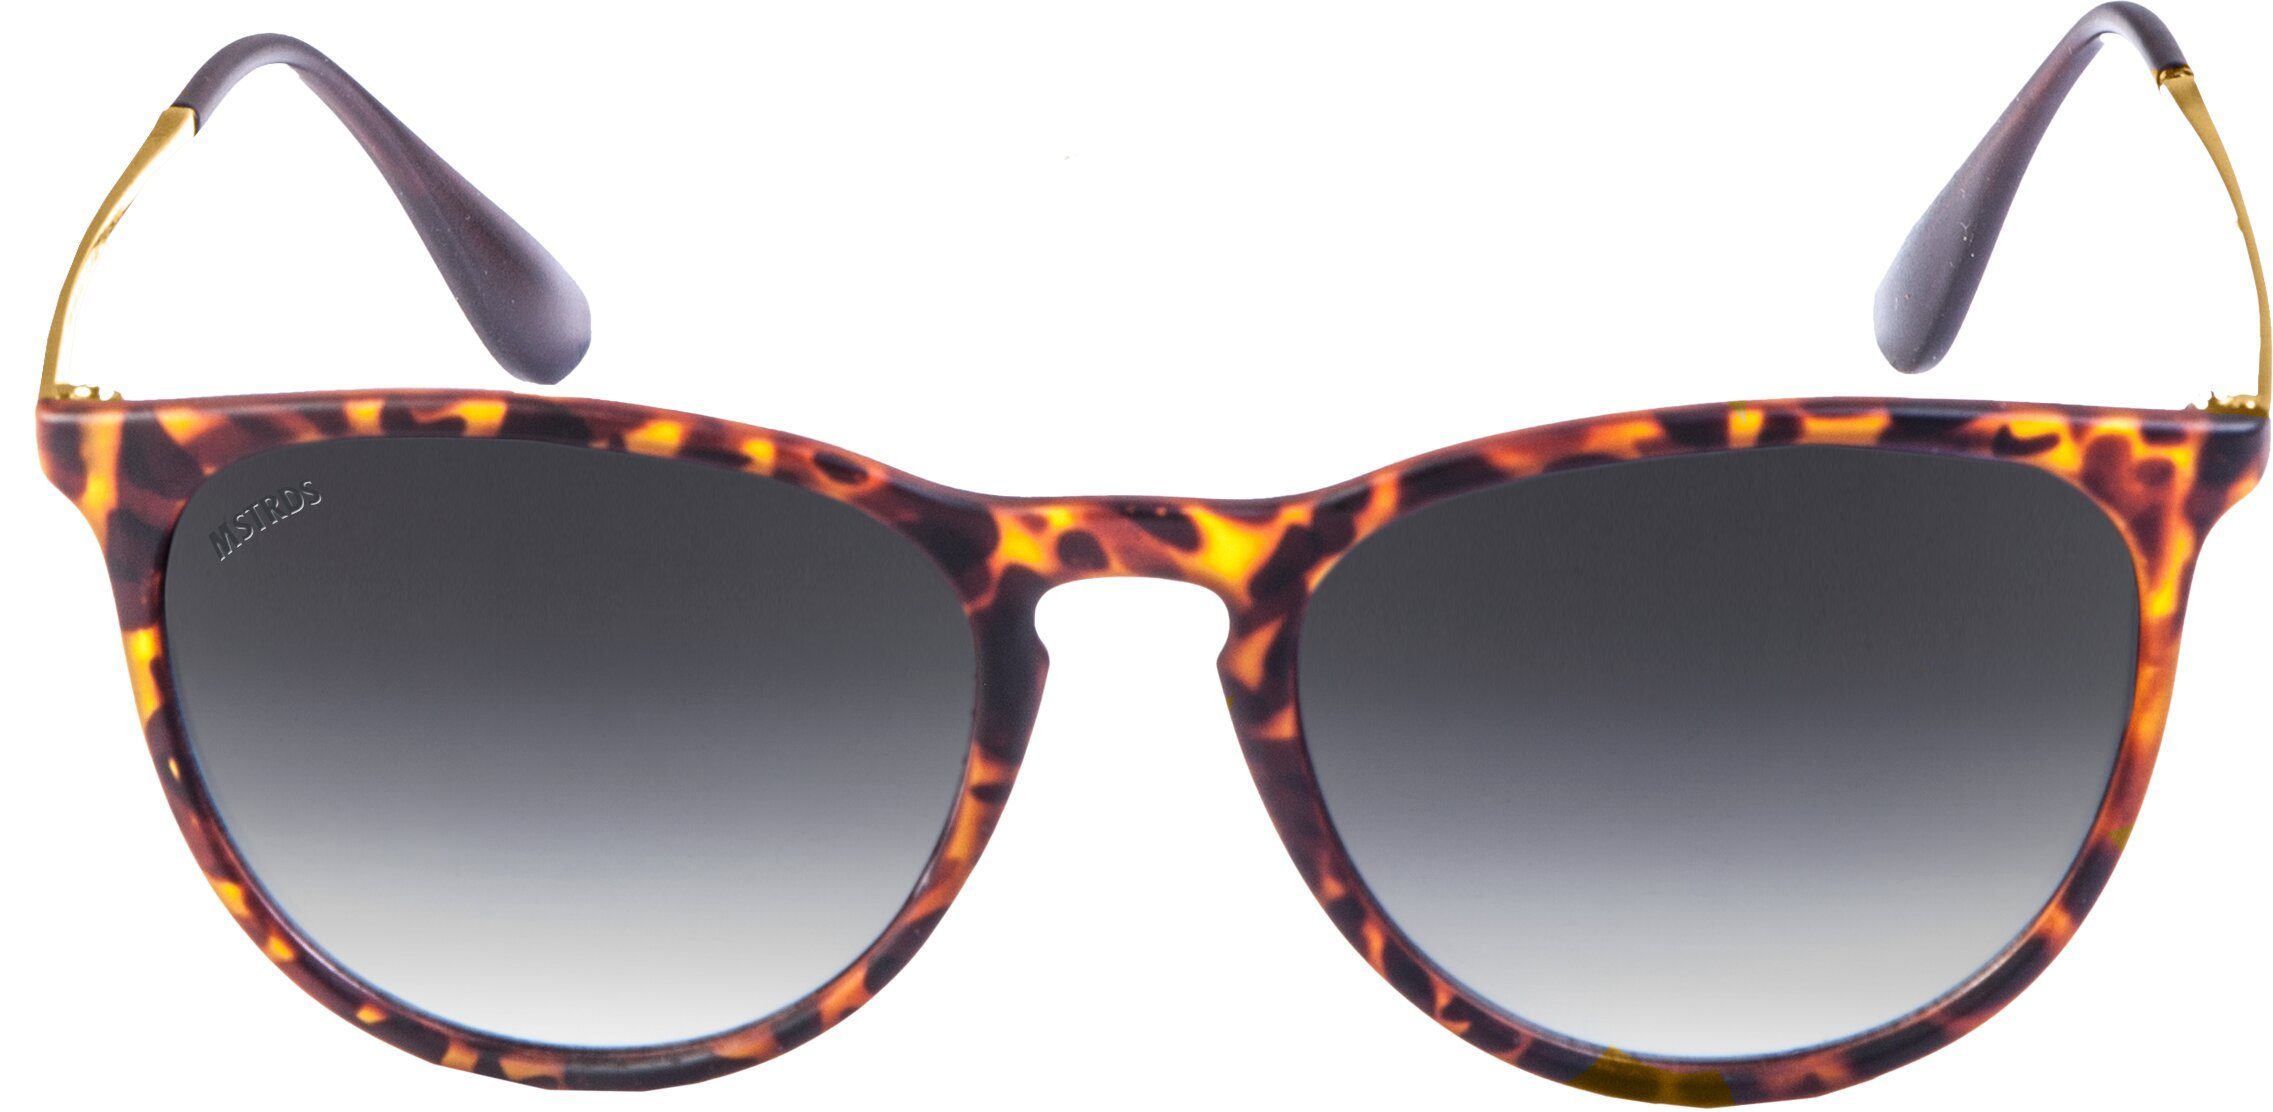 MSTRDS Sonnenbrille Accessoires Sunglasses Arthur, Ideal auch für Sport im  Freien geeignet